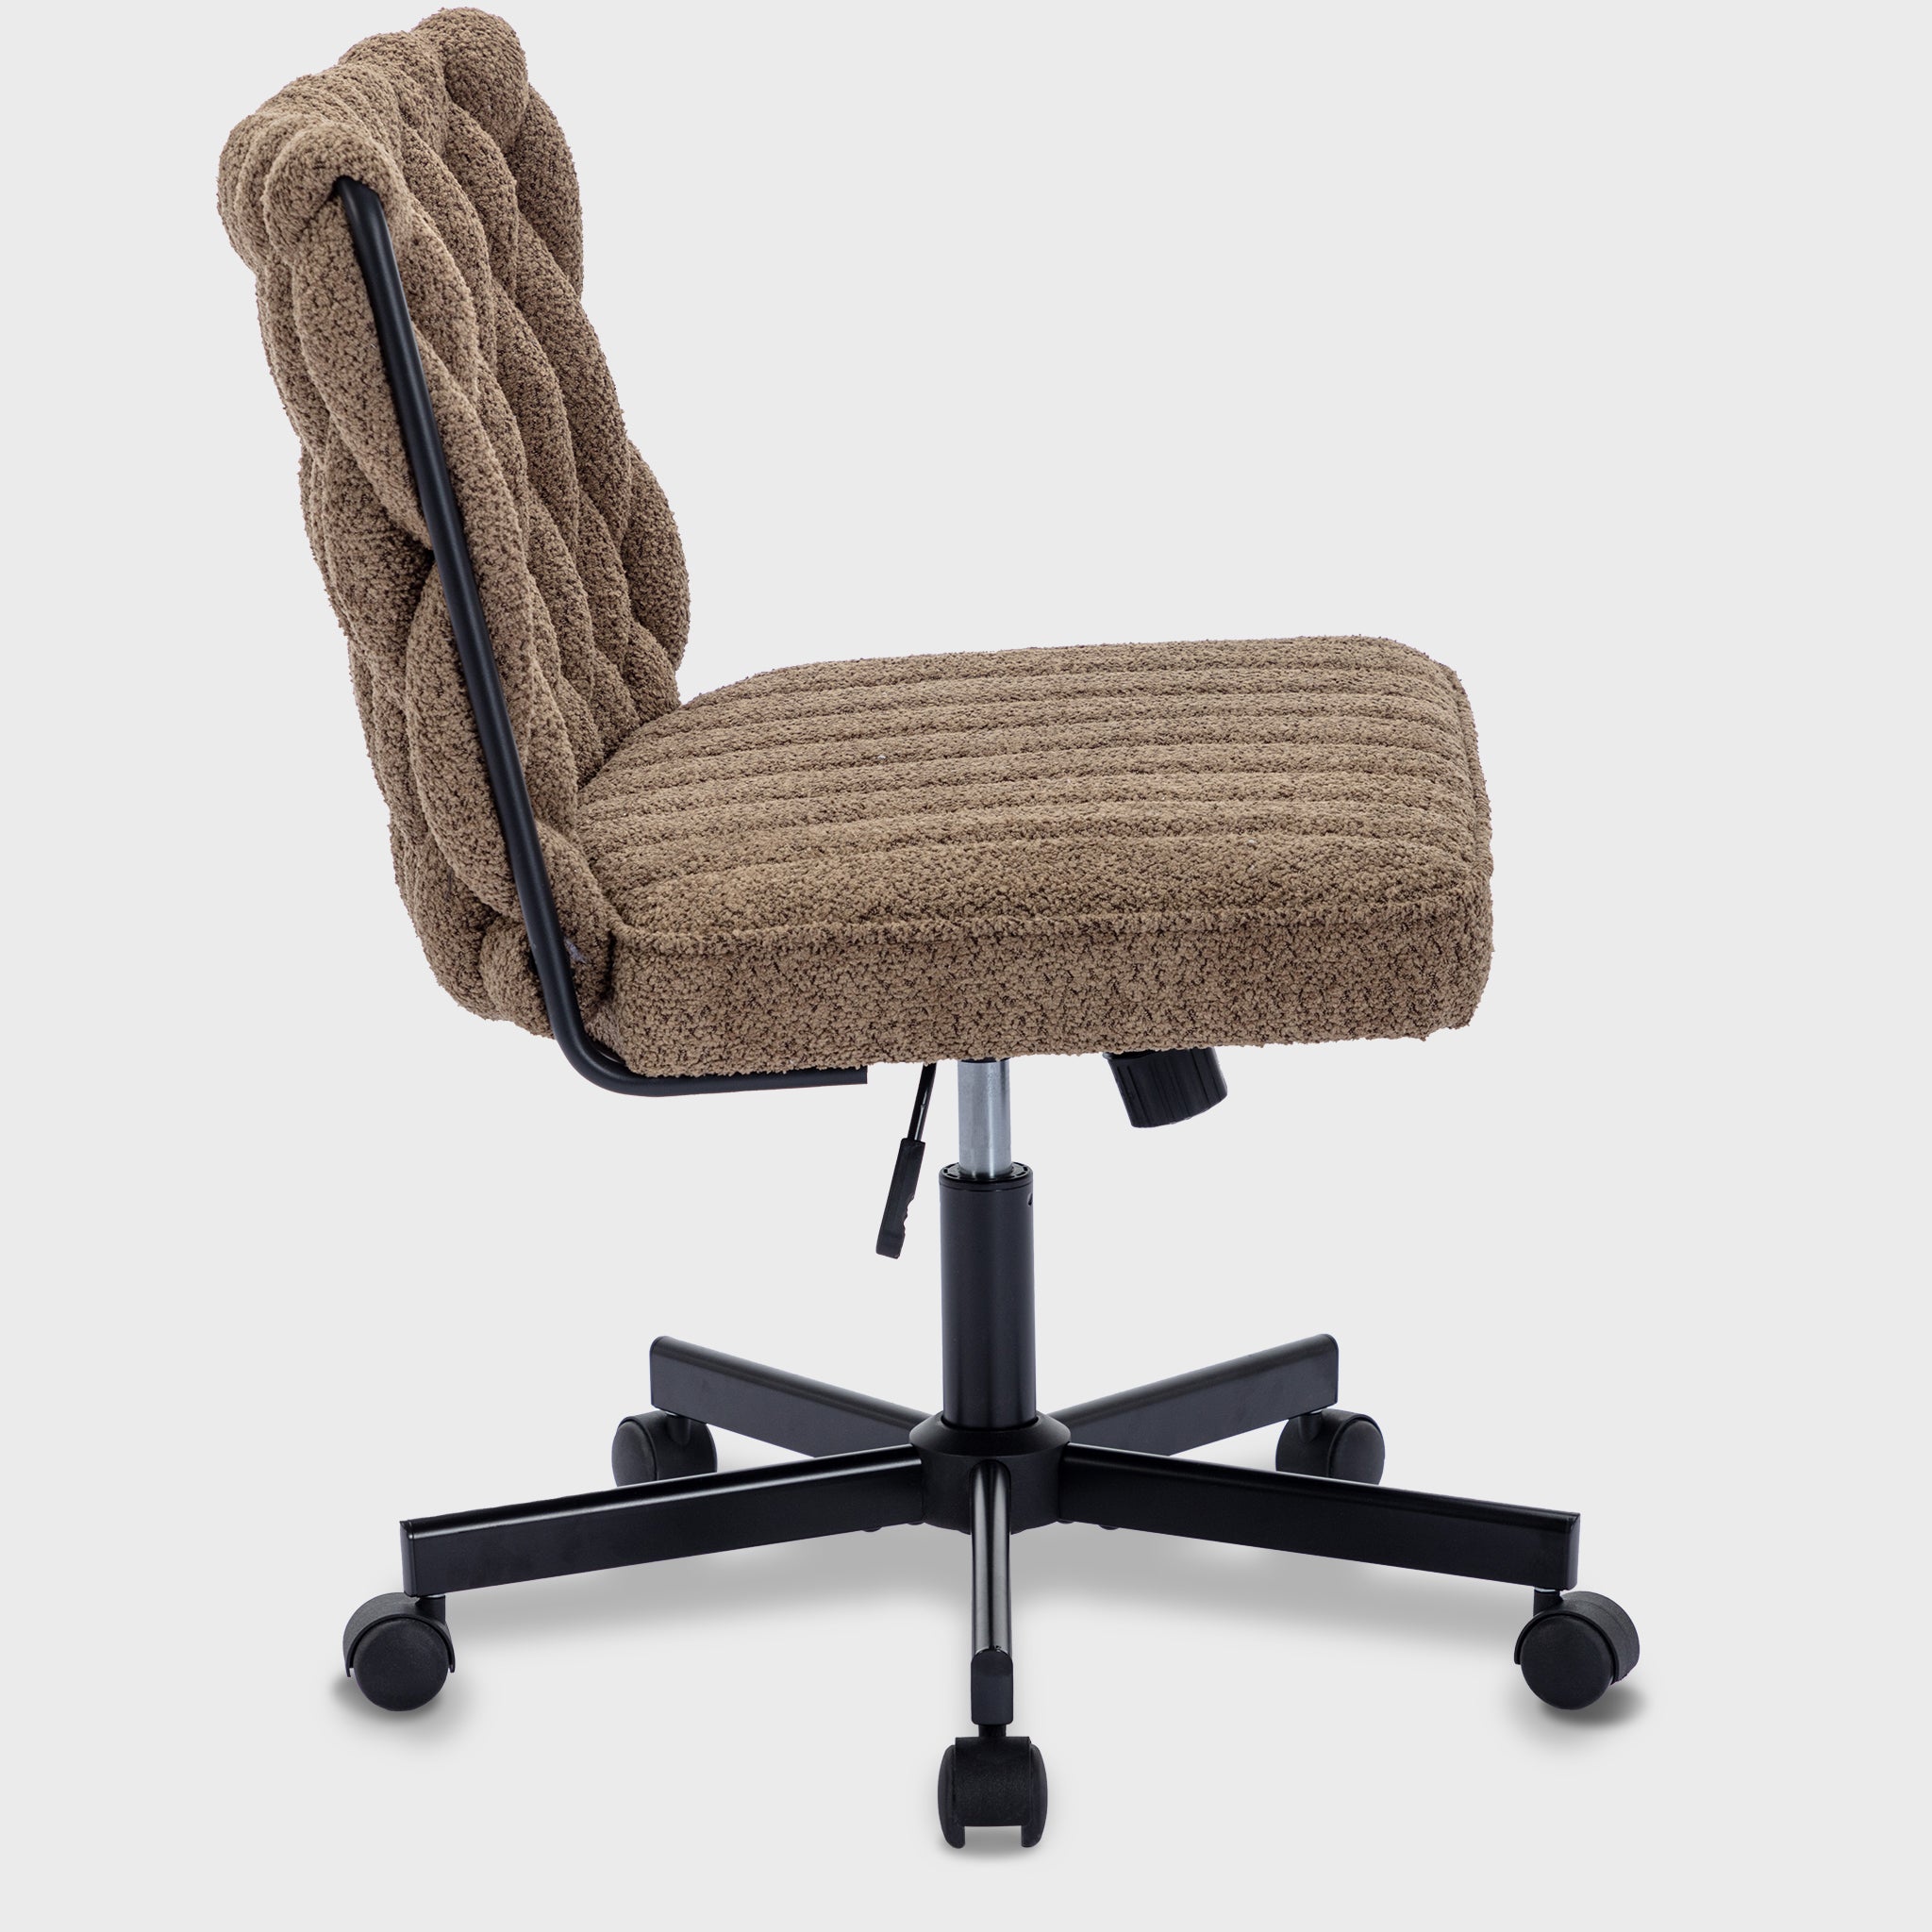 Cross Legged Office Chair 0135-C